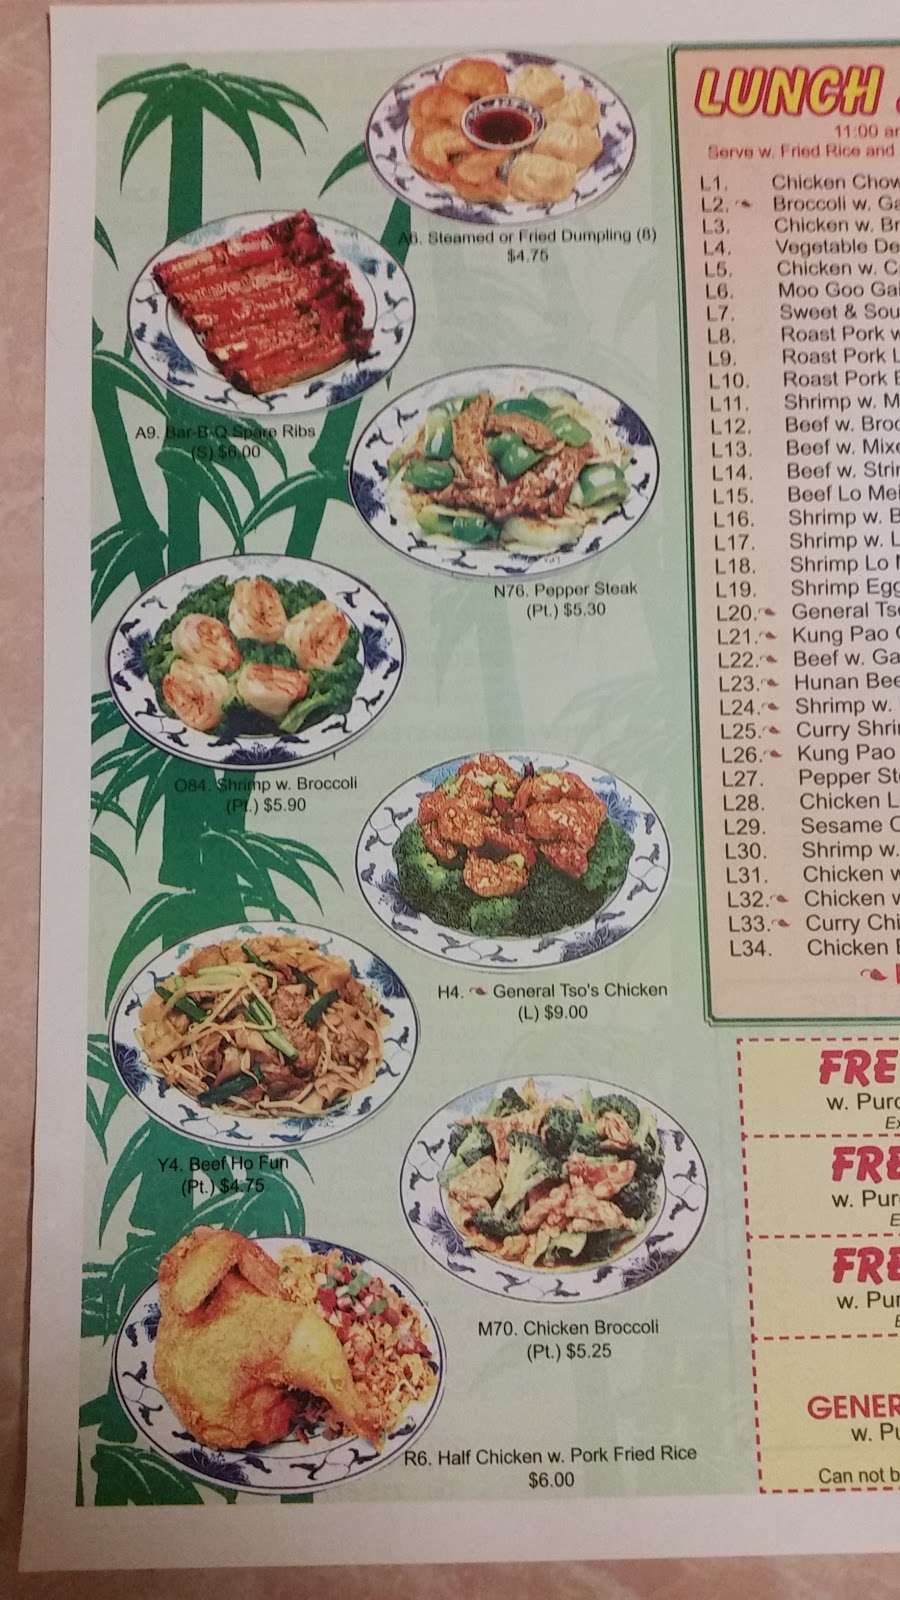 China House Restaurant | 5610 Lancaster Ave, Philadelphia, PA 19131, USA | Phone: (215) 877-1868